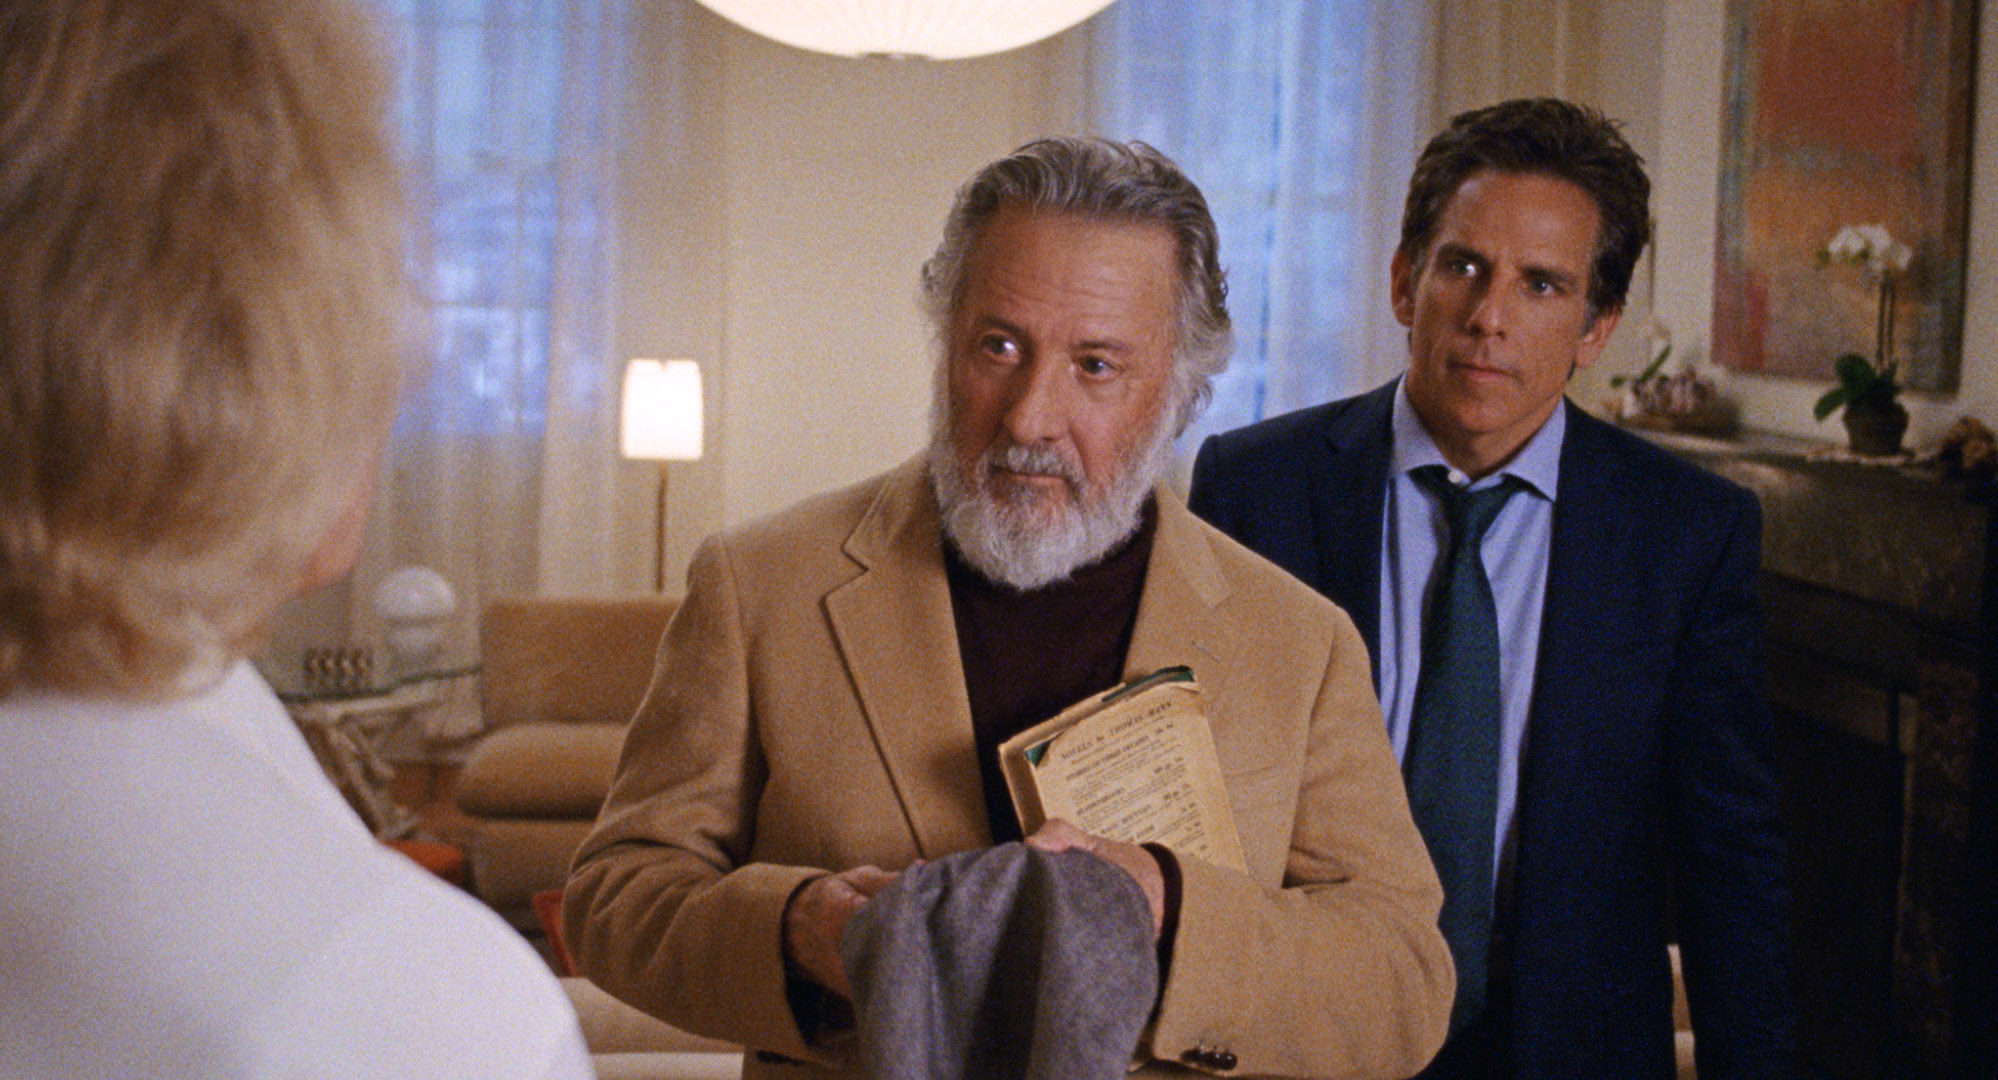 Dustin Hoffman and Ben Stiller stand listening to an off screen person